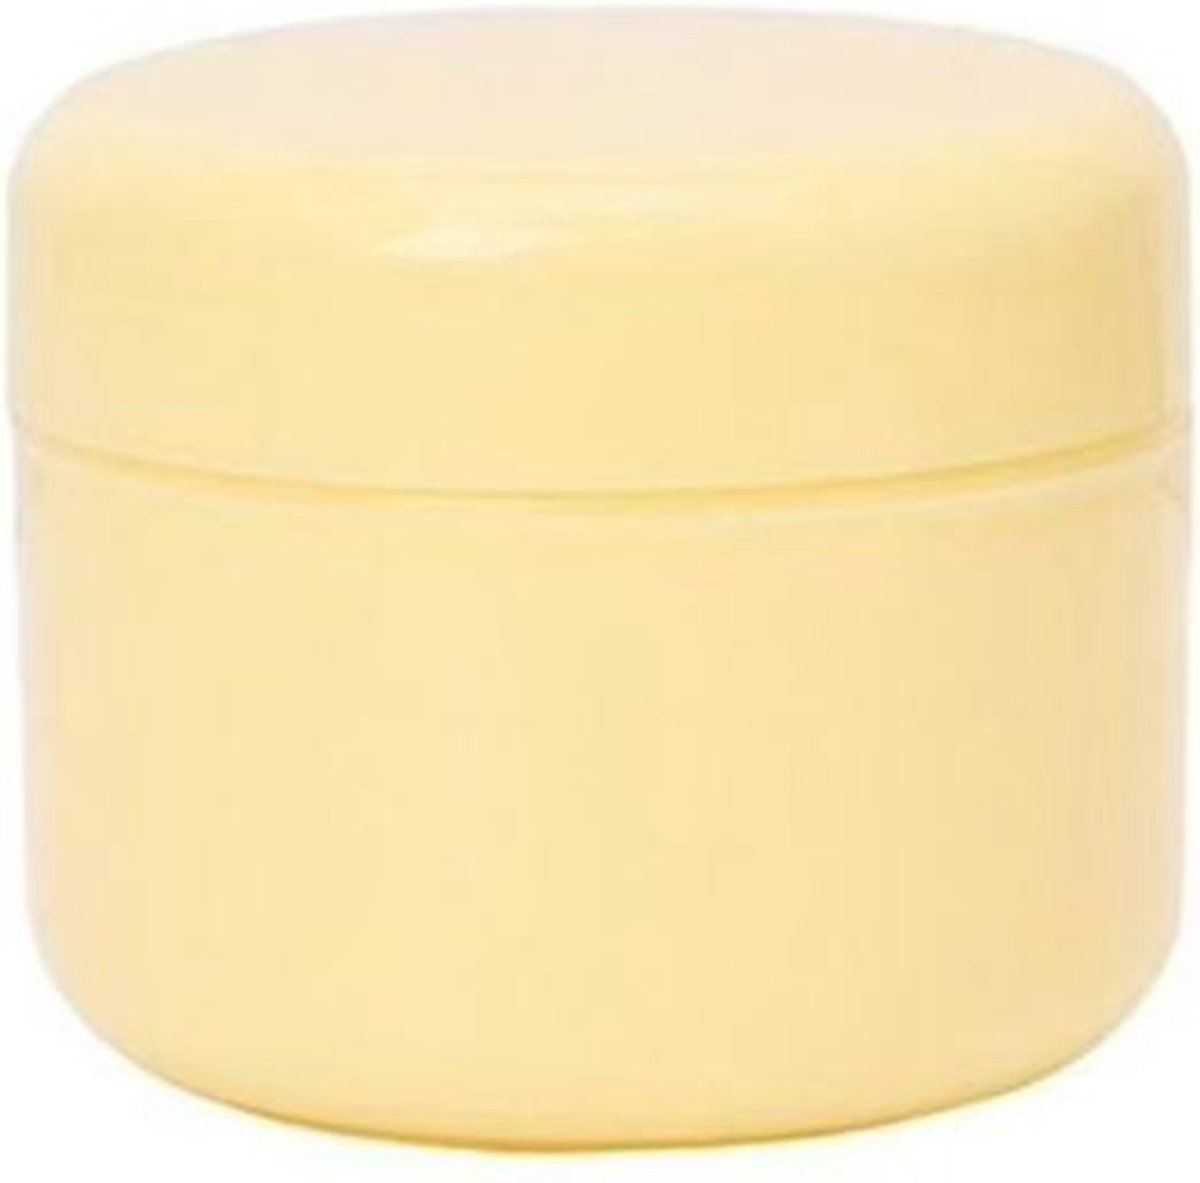 Leeg make-up potje - lichtgeel - 100 gram - aromatherapie - hervulbaar